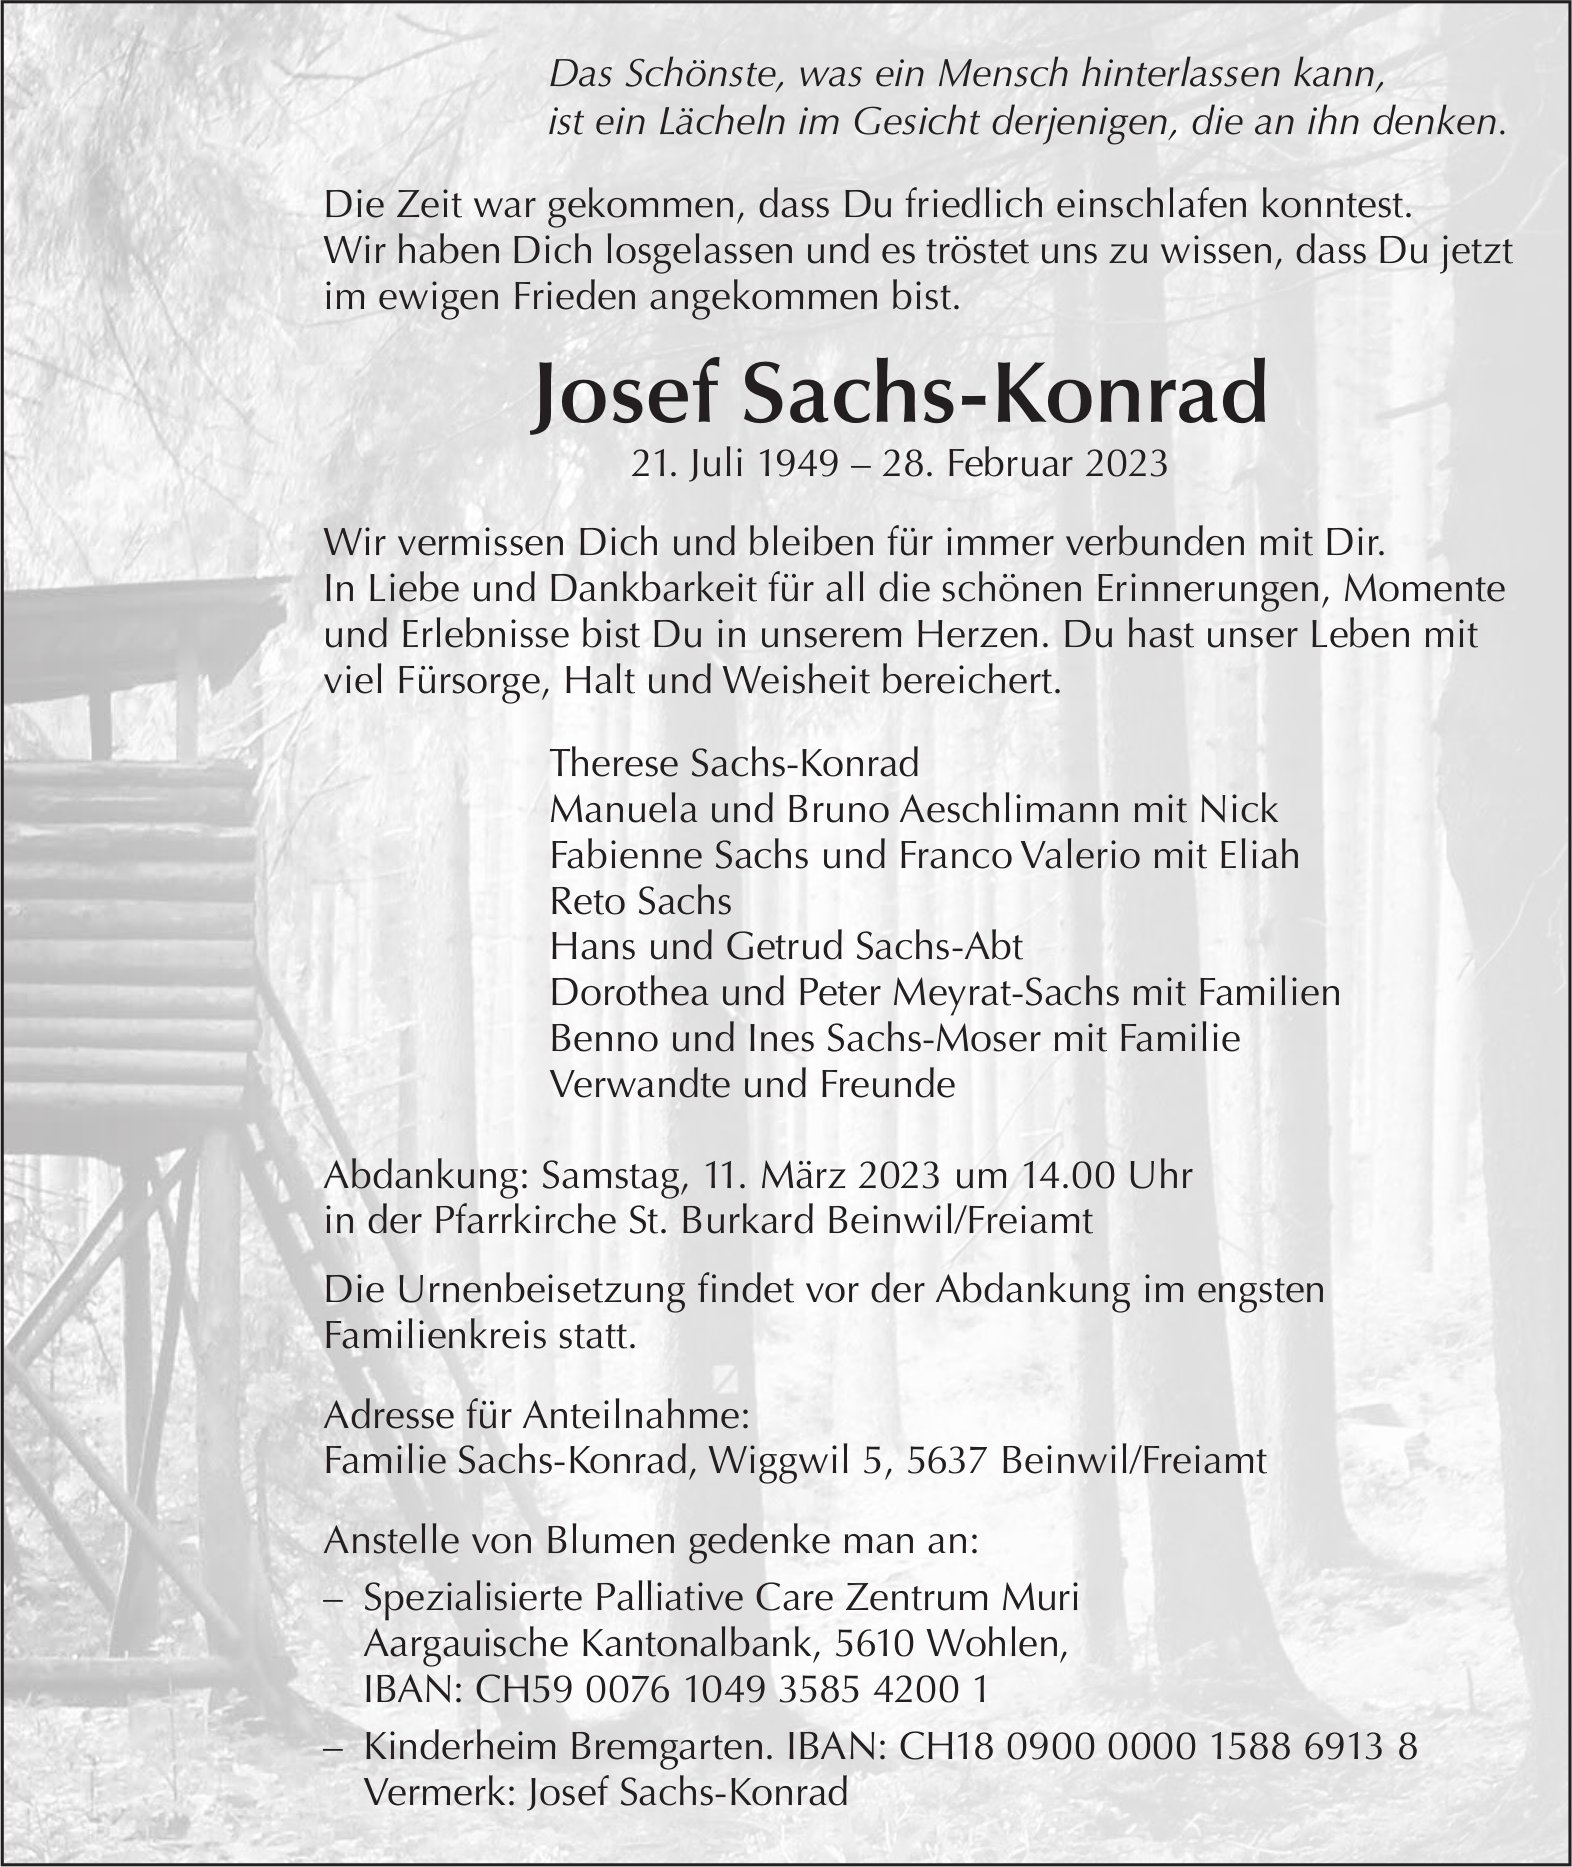 Sachs-Konrad Josef, Februar 2023 / TA